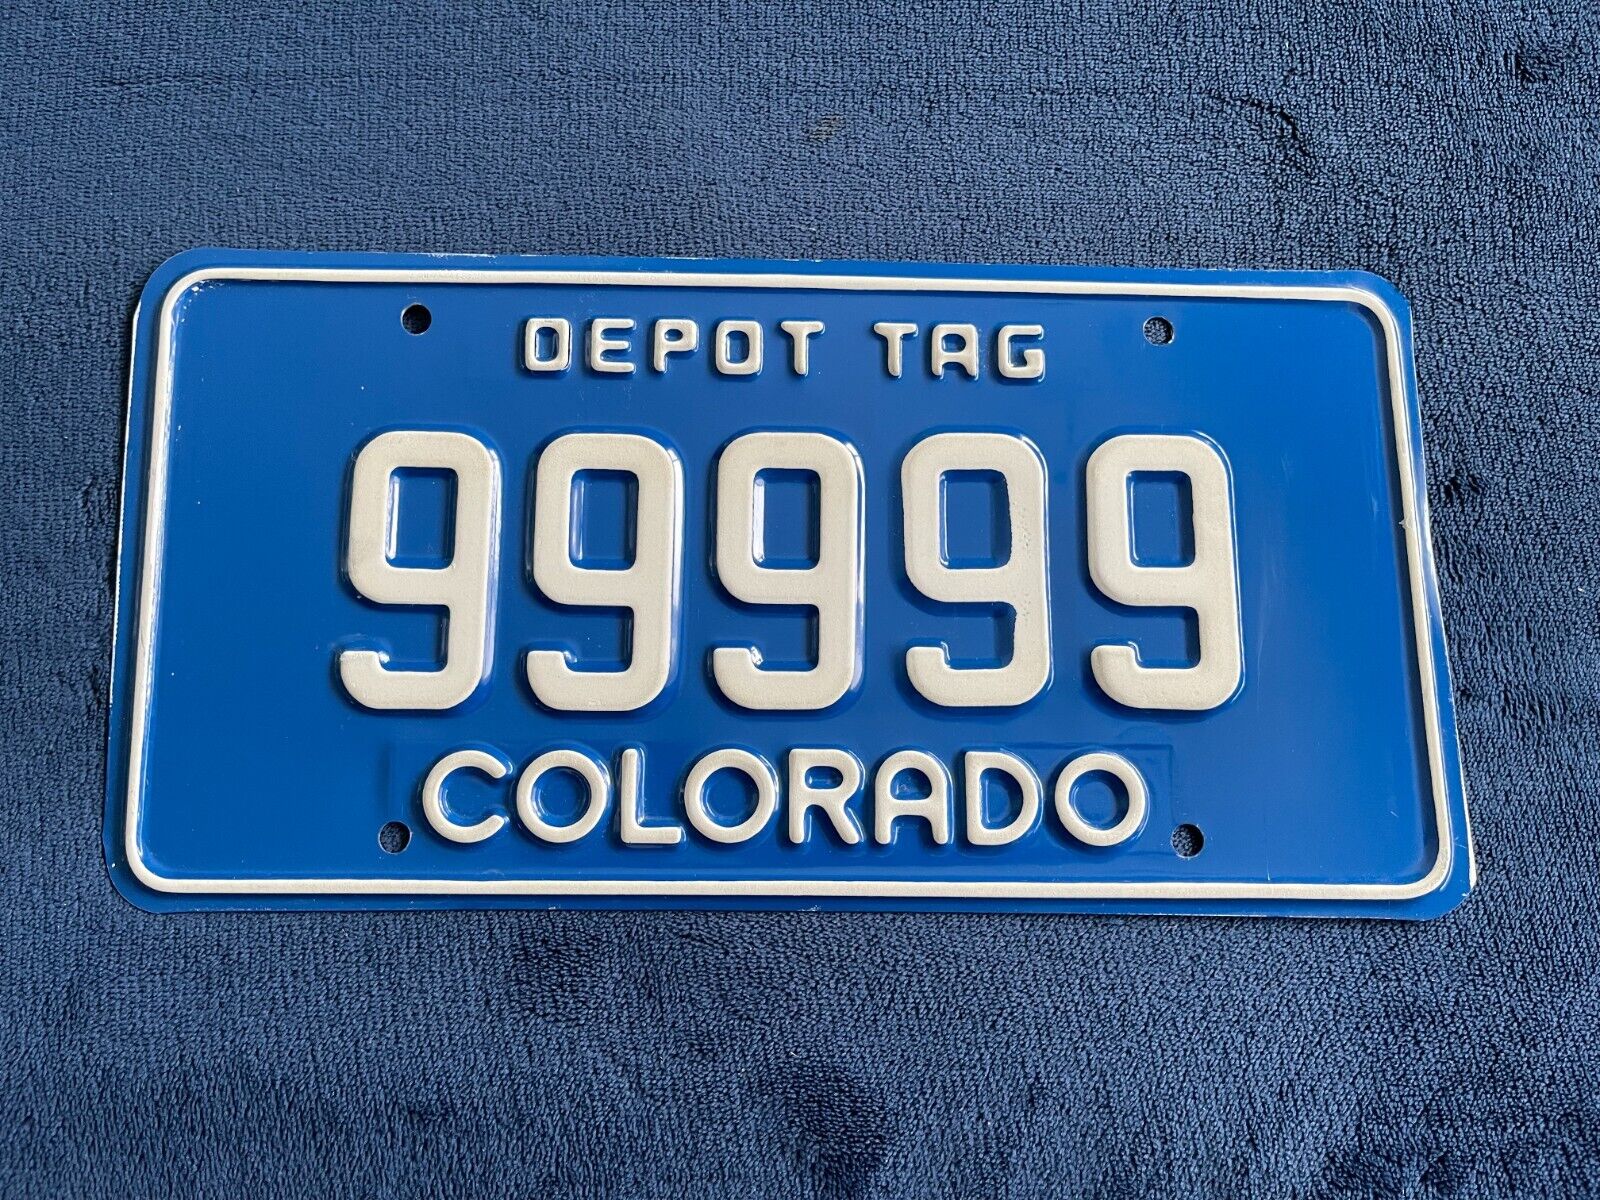 c1990 Colorado Depot Tag License Plate # 99999